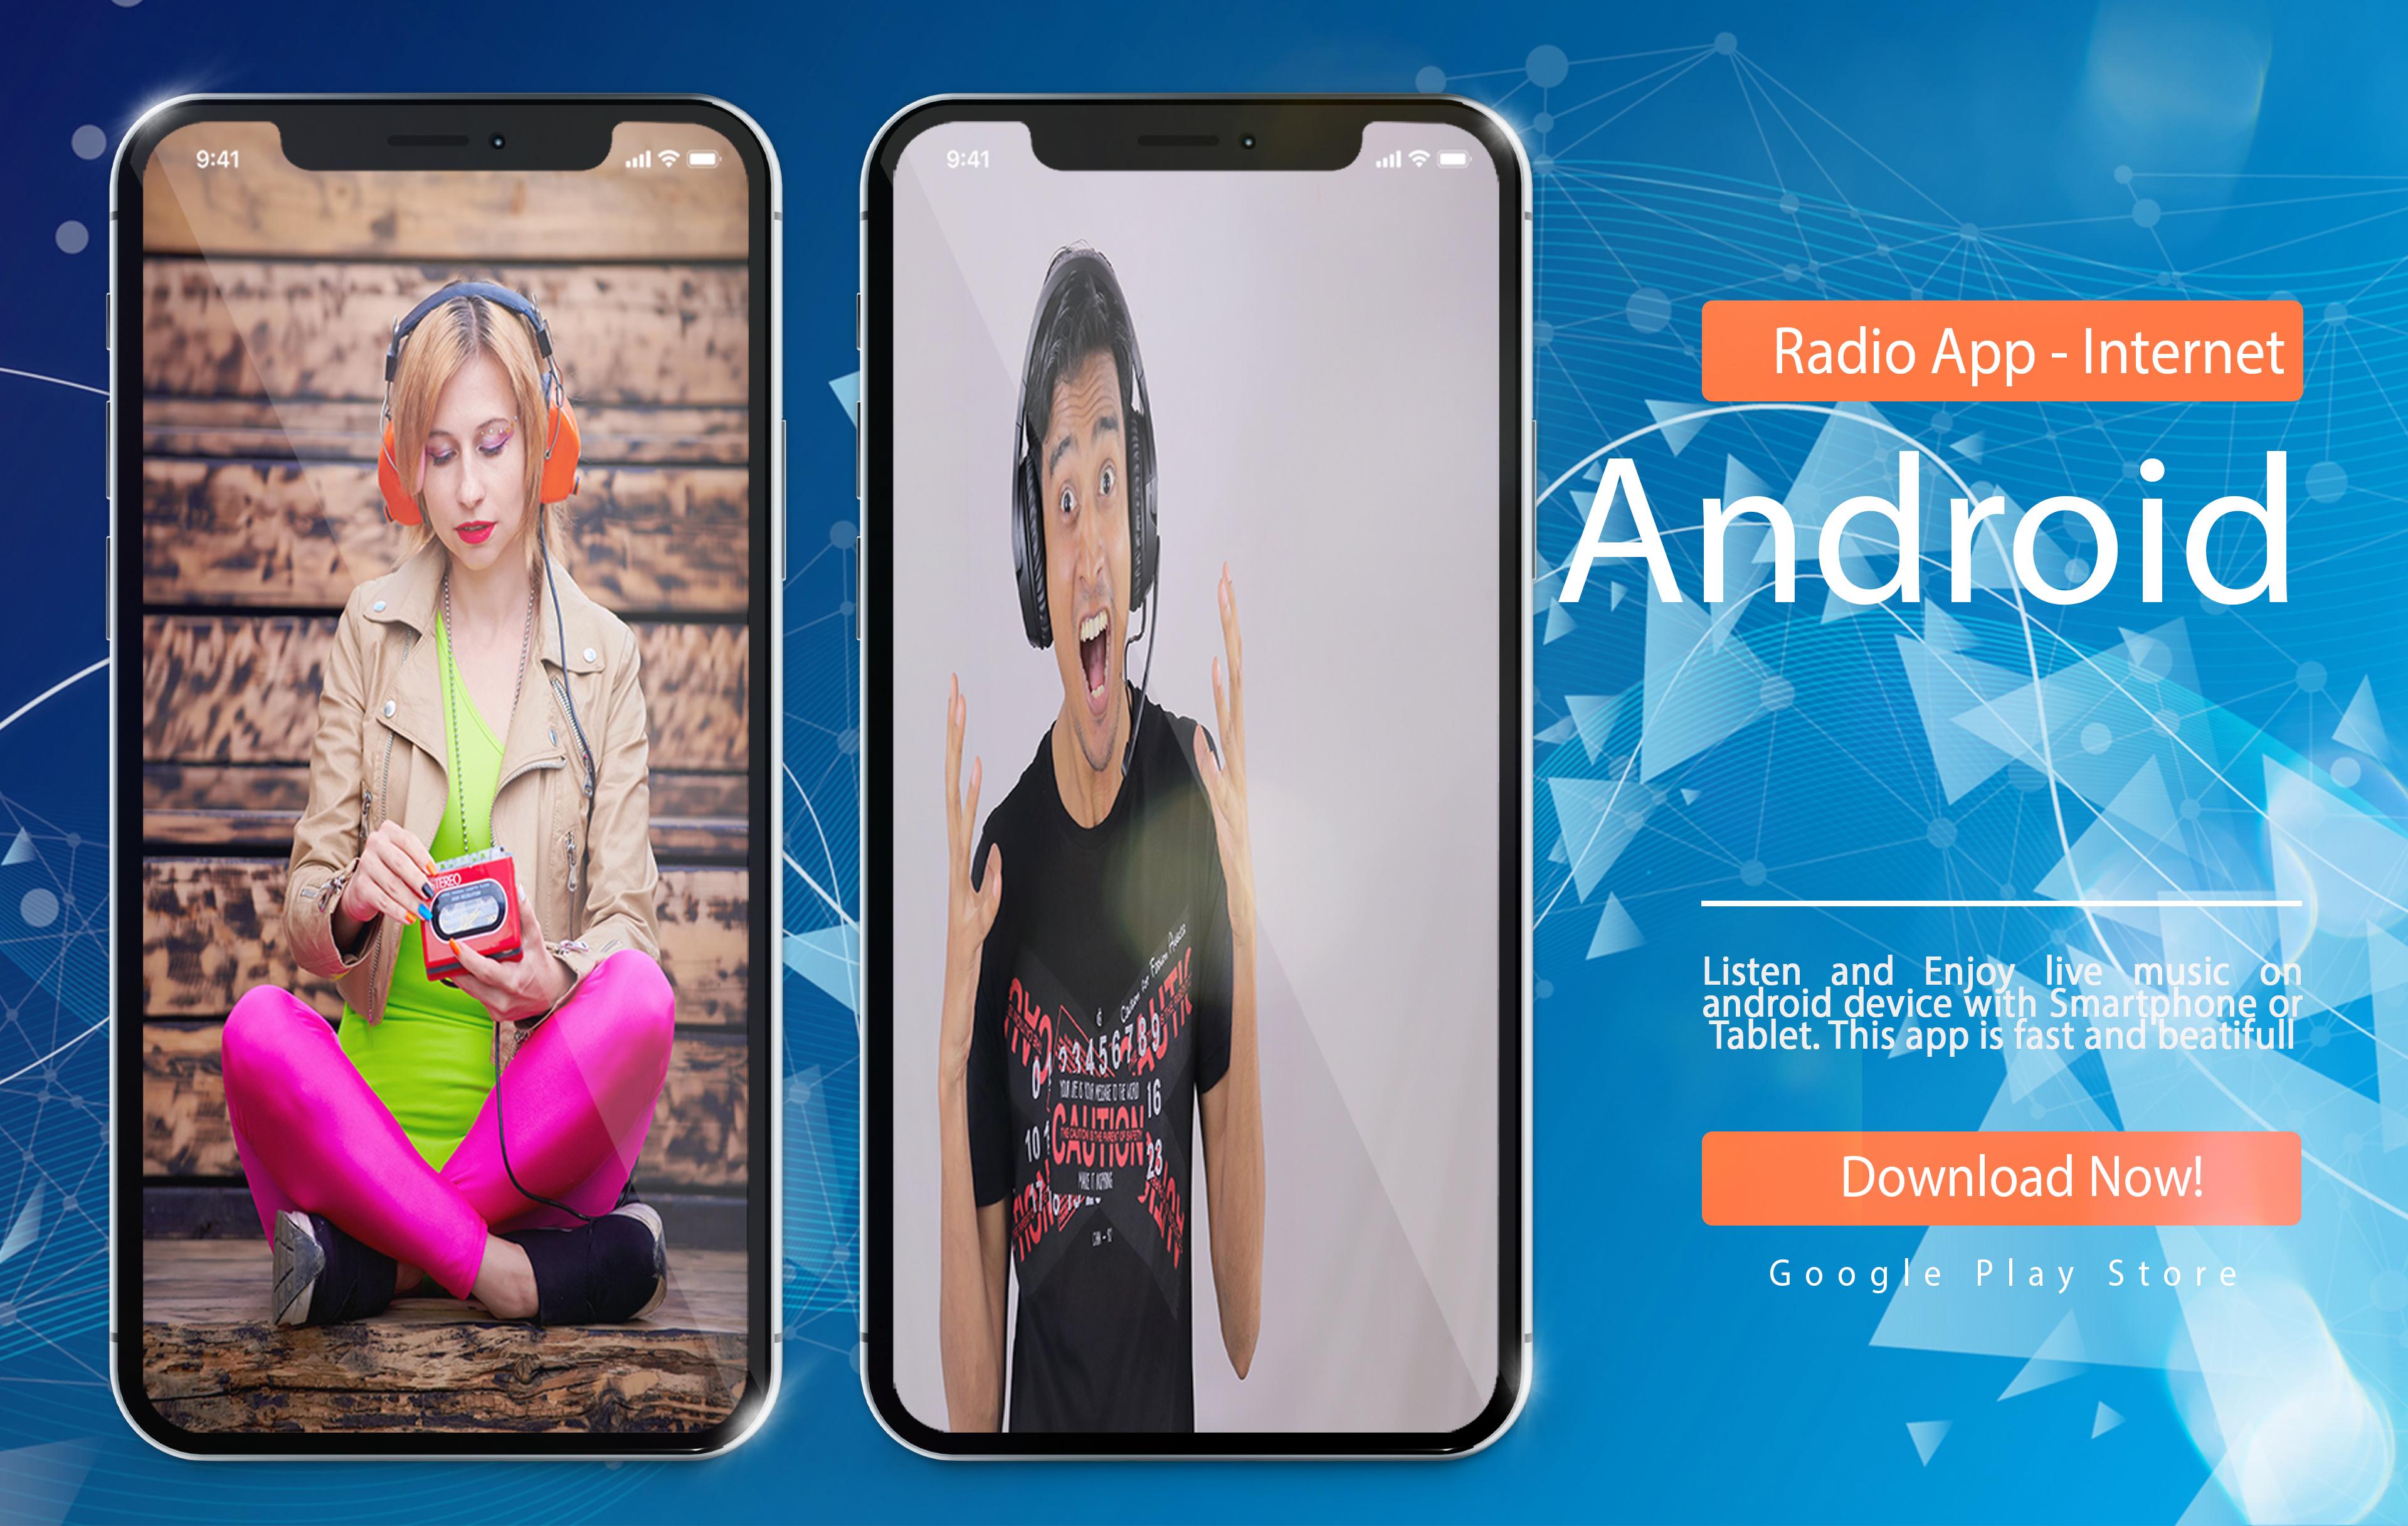 Radio Amalia 92.0 FM Lisboa Portugal für Android - APK herunterladen